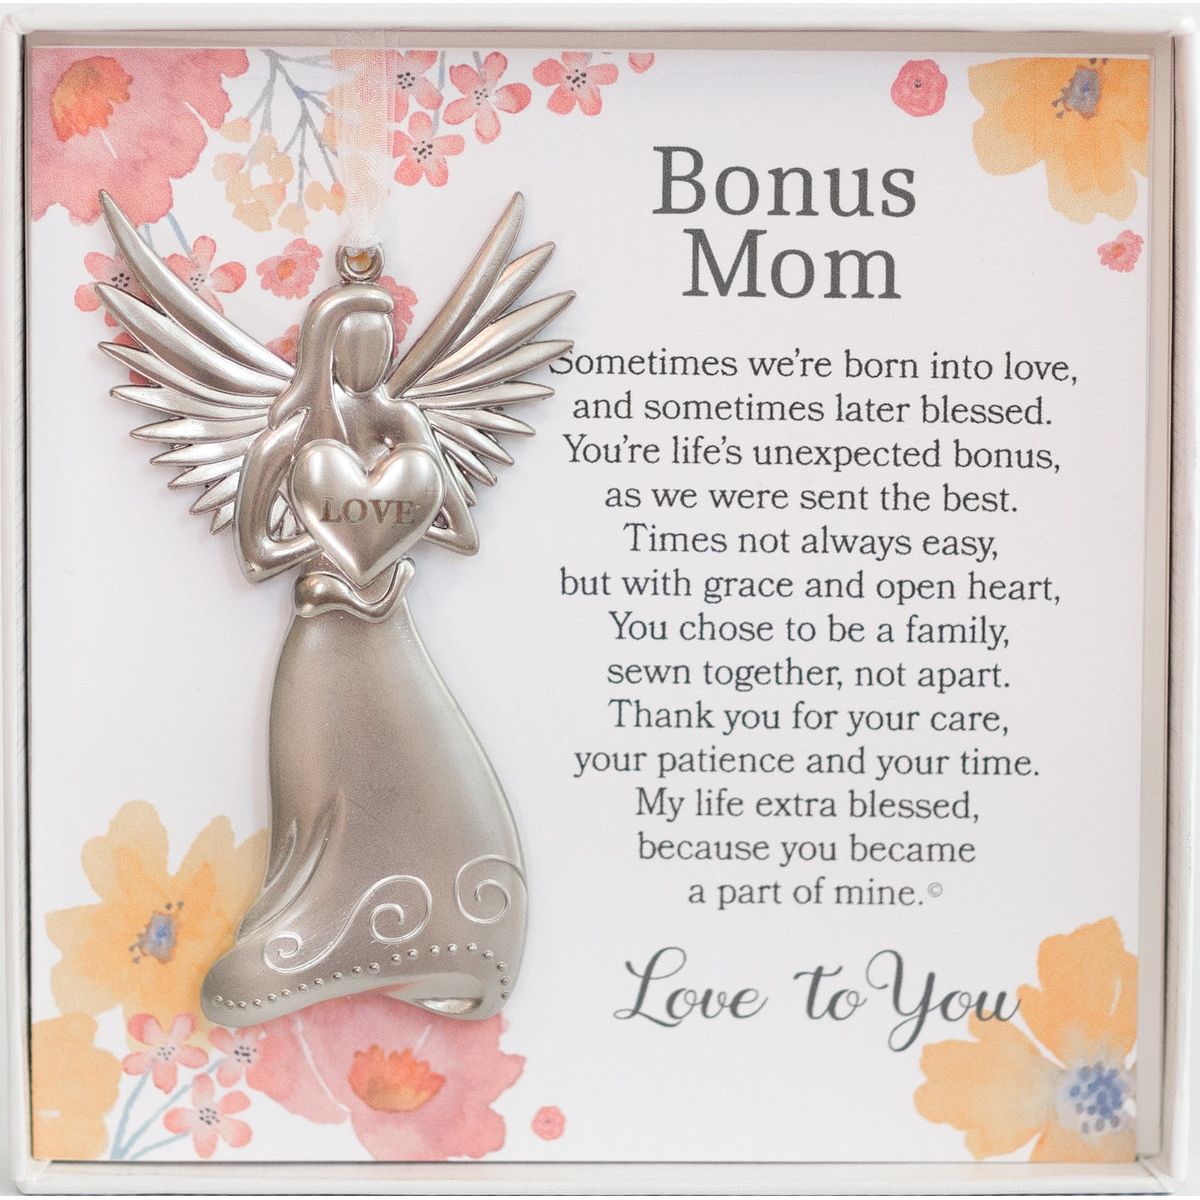 I Love Bonus Mom Gift: Angel Ornament and Card